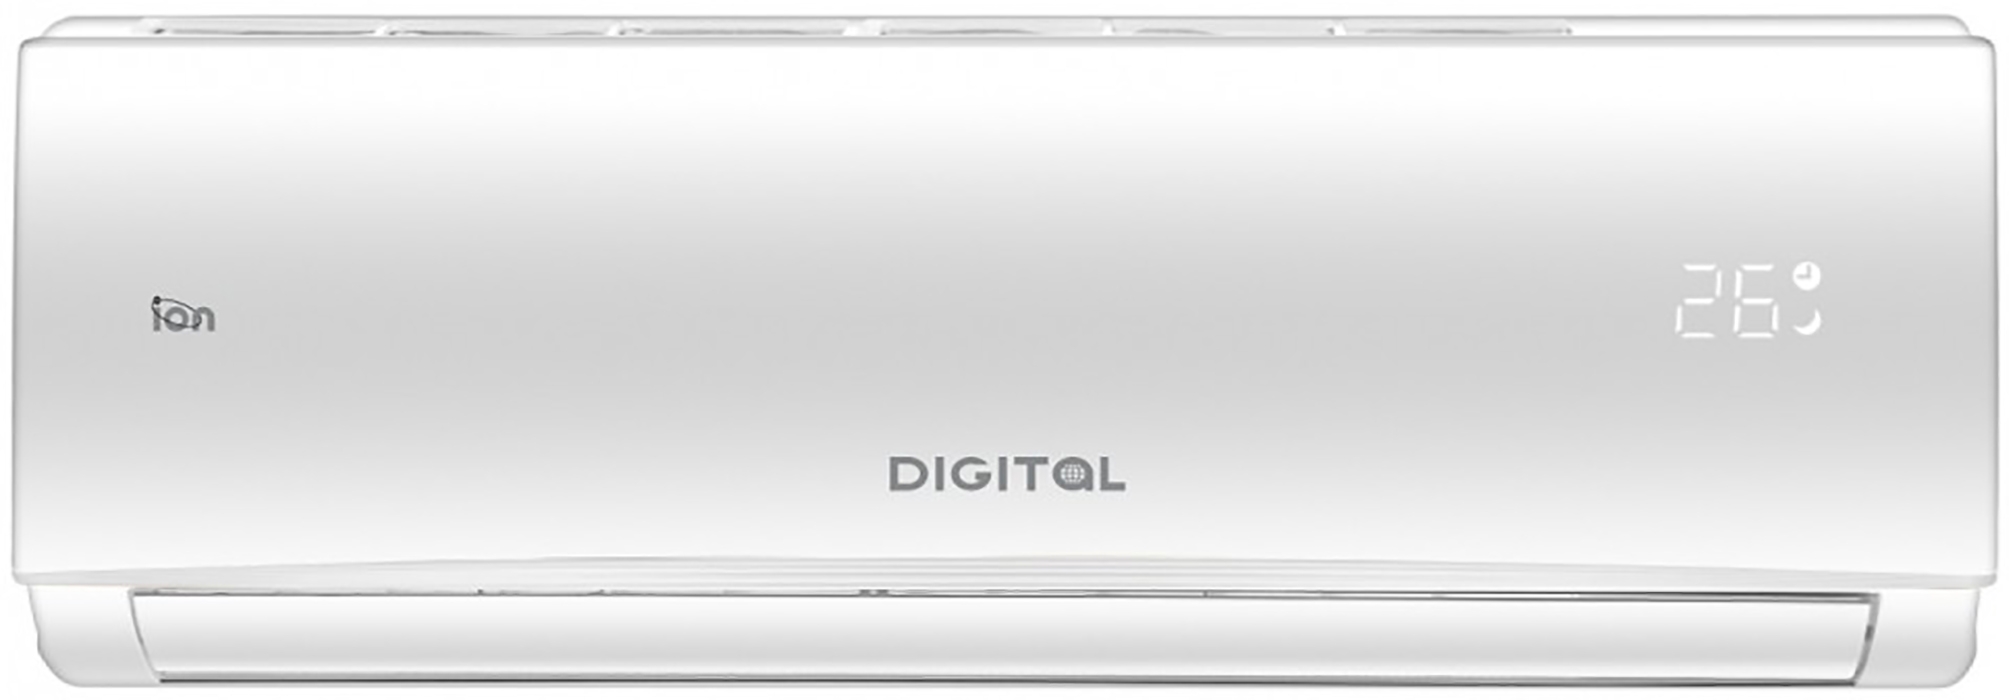 Кондиционер сплит-система Digital DAC-i18EWT (Wi-Fi ready) цена 0.00 грн - фотография 2